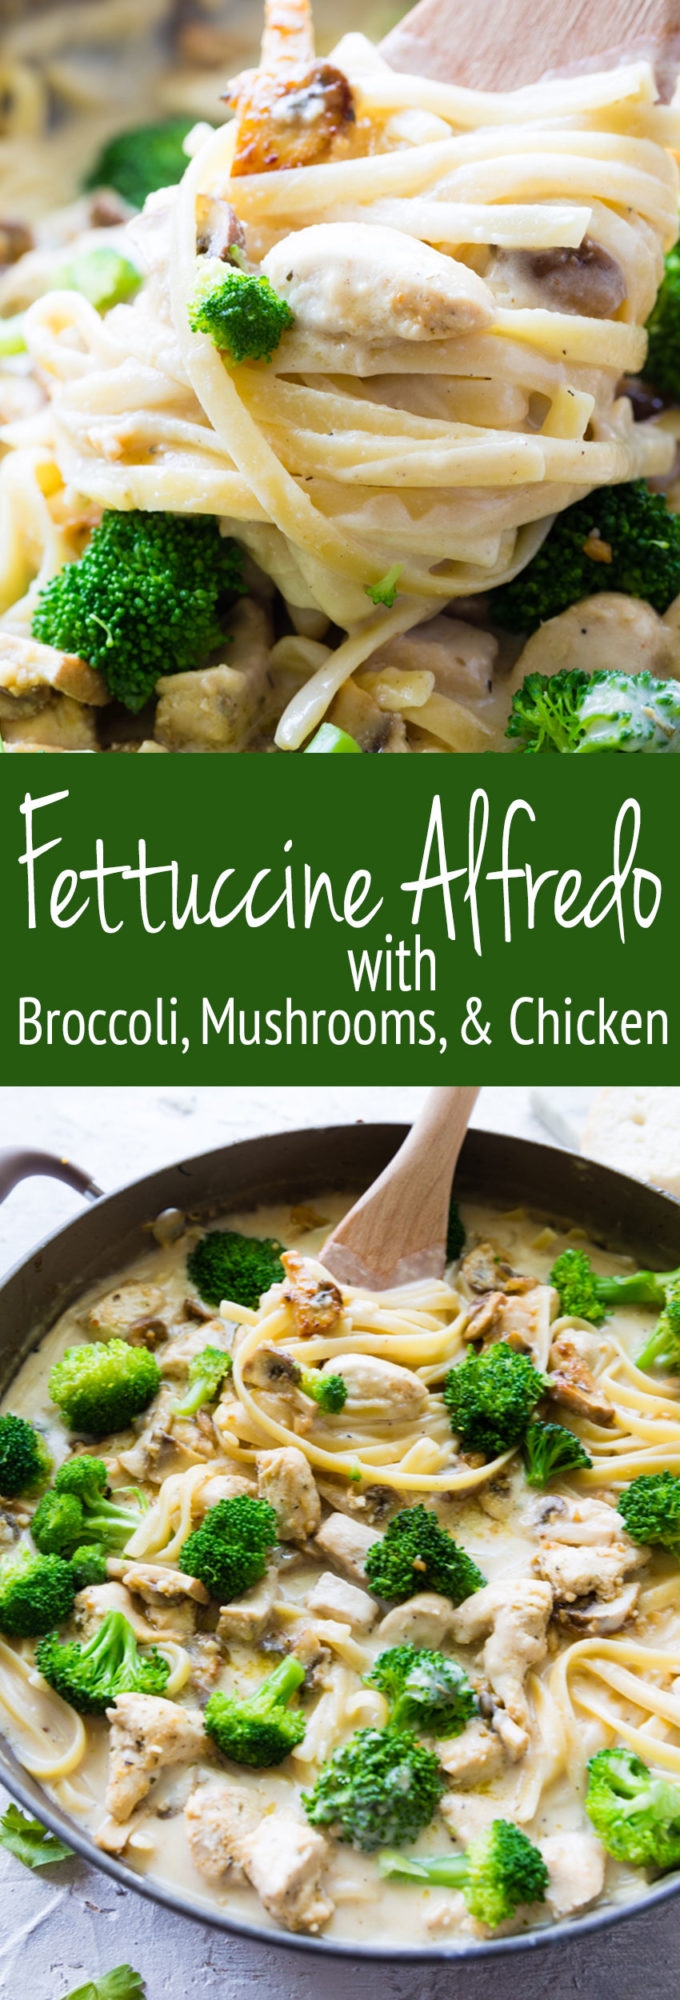 Fettuccine Alfredo with broccoli, mushrooms, and chicken